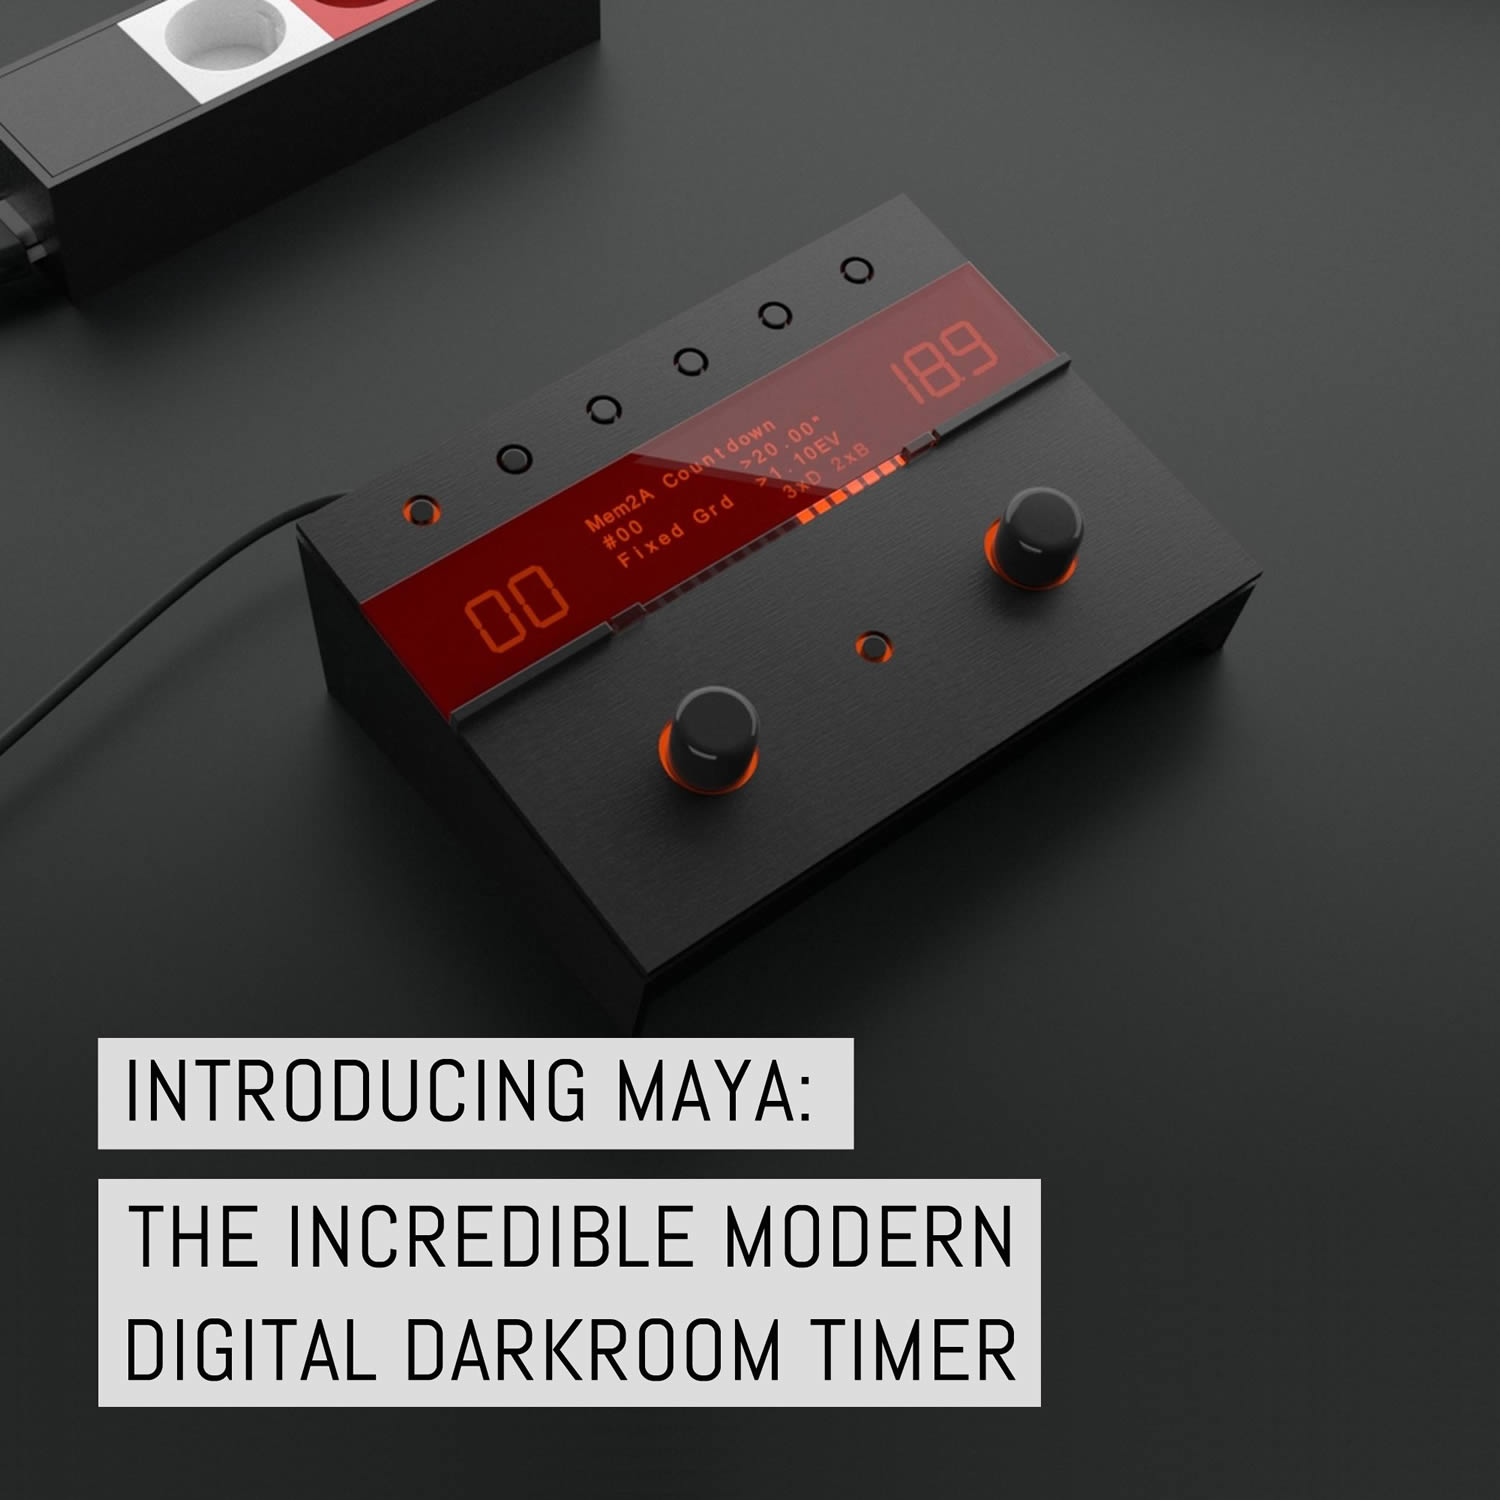 Introducing MAYA: the incredible modern digital darkroom timer